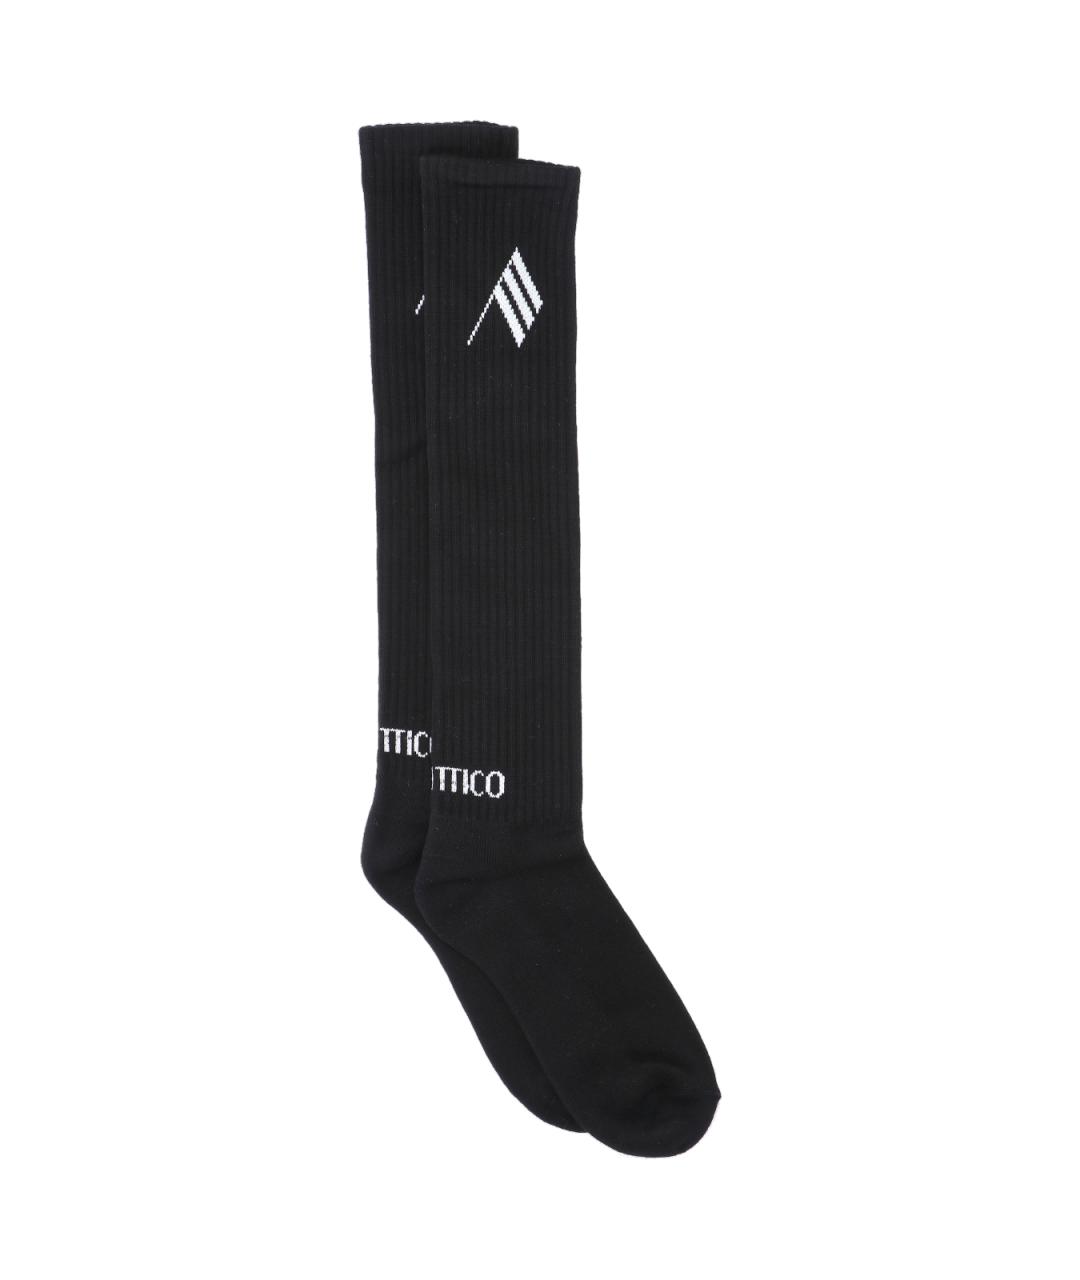 THE ATTICO Черные носки, чулки и колготы, фото 1